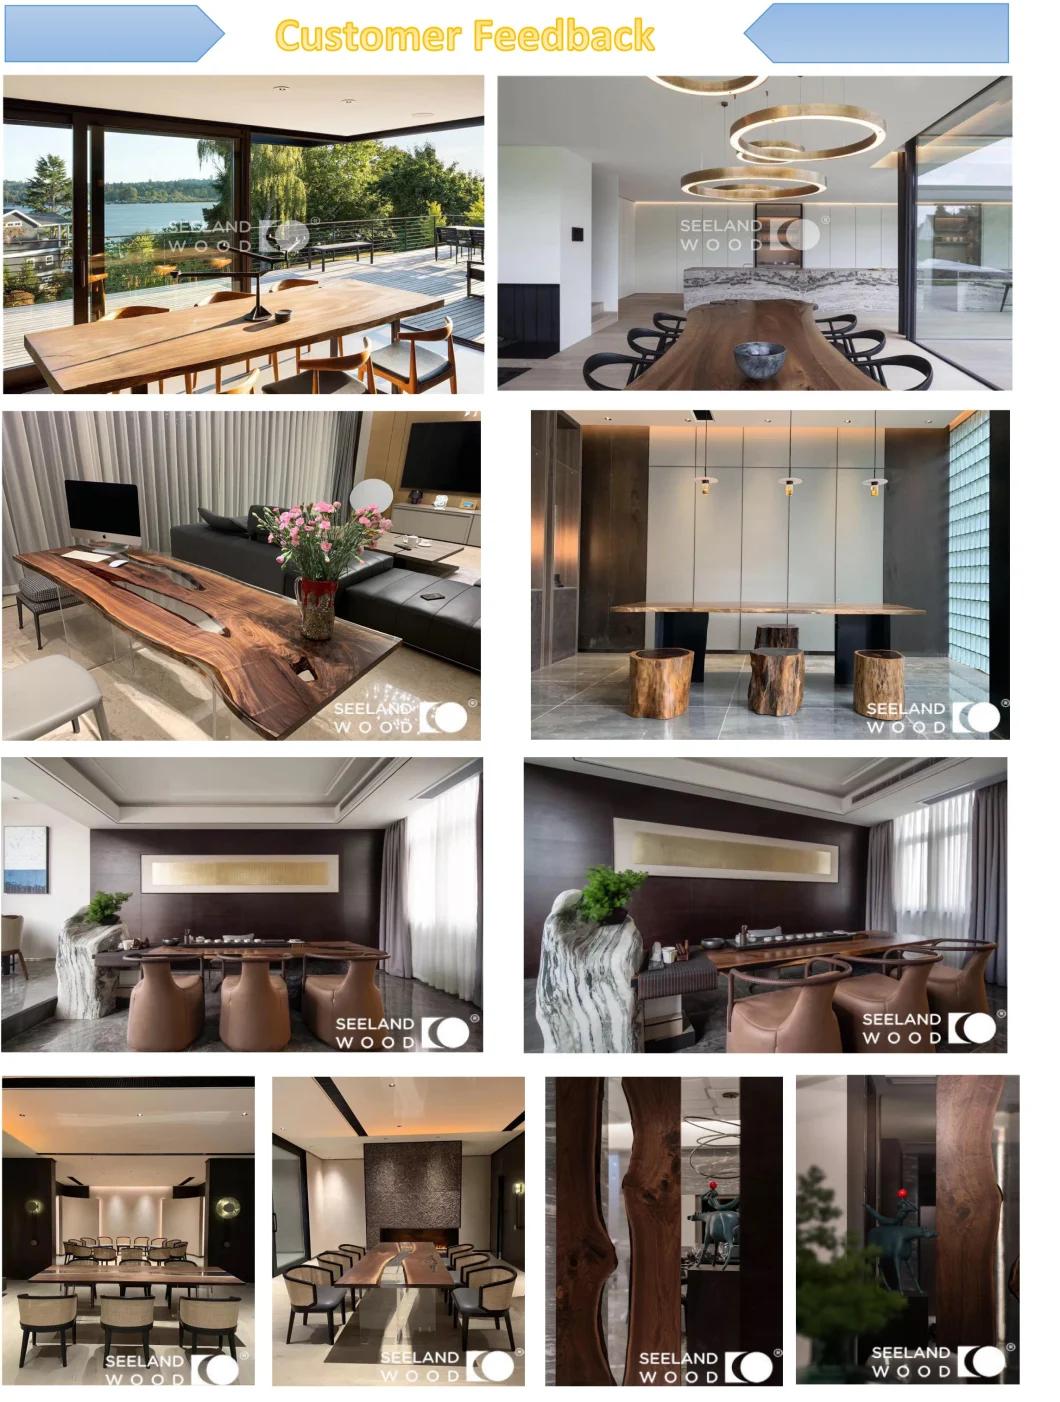 Custom Size Poplar Burl Coffee Table for Luxury Furniture